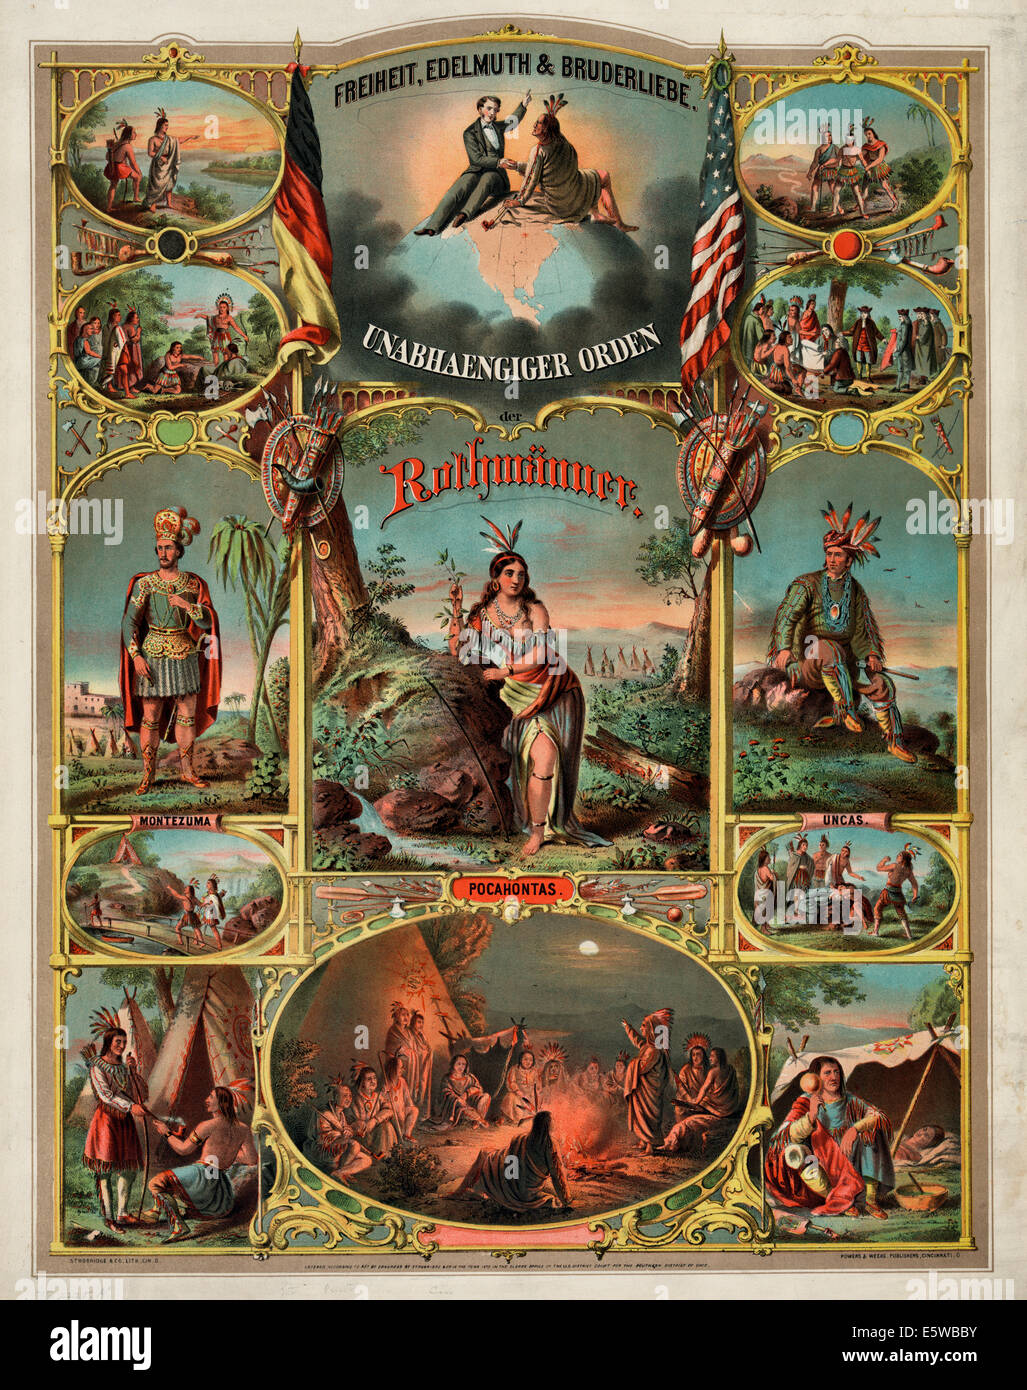 Unabhaengiger Orden der Rothmänner - Independent Order of Roth Men - circa 1870 Stock Photo